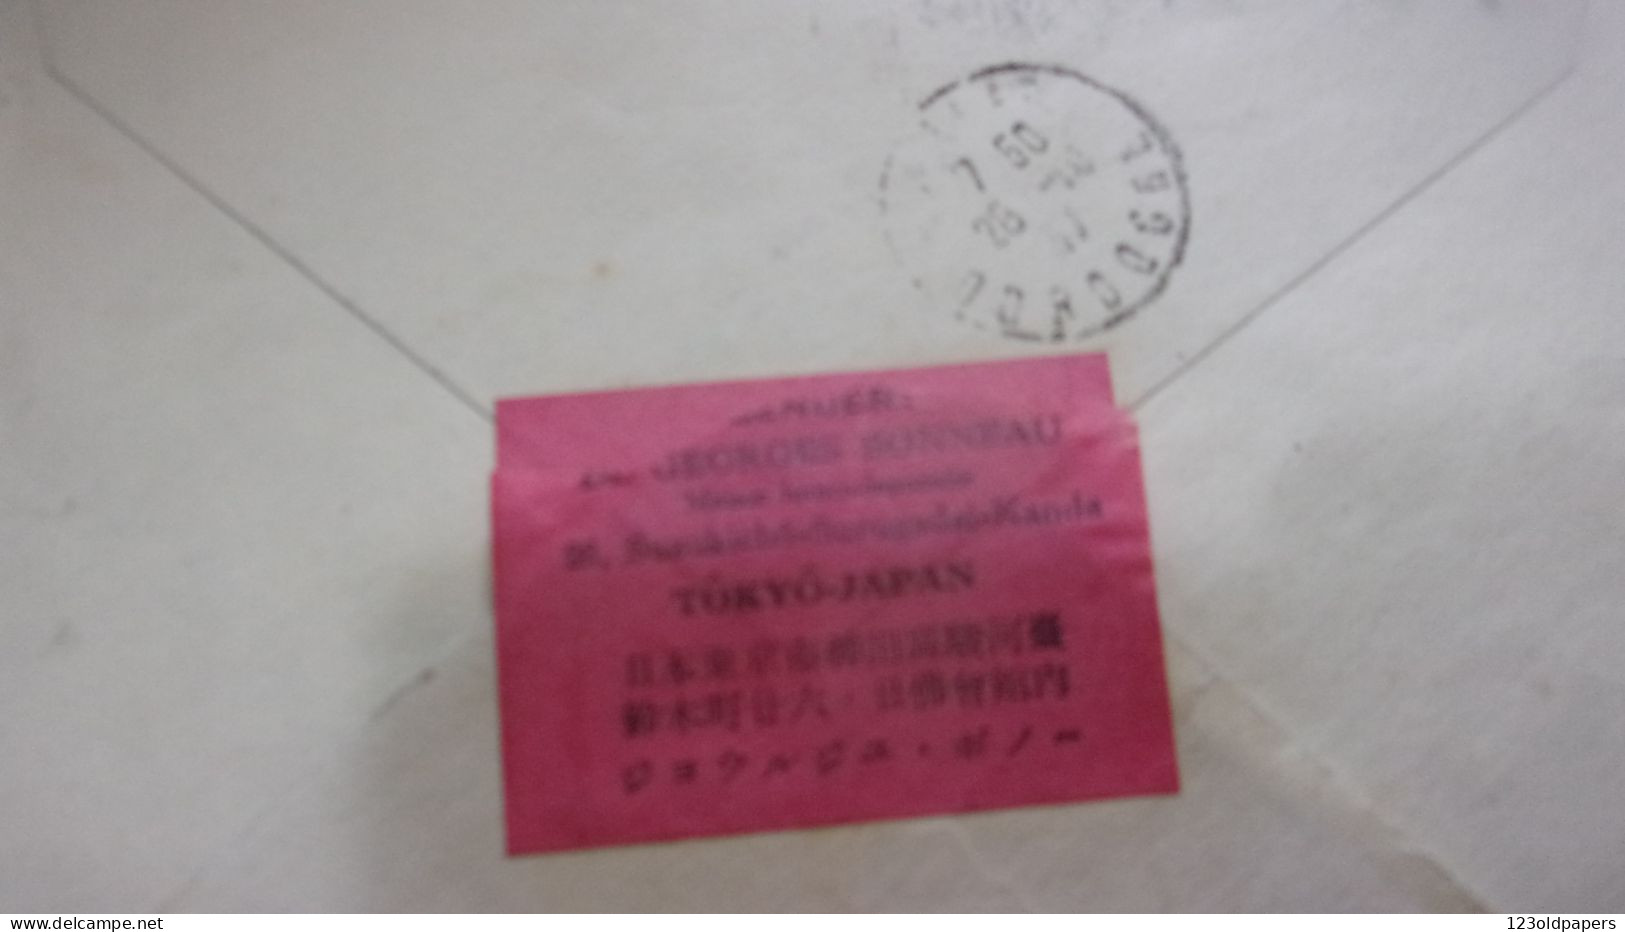 ENVELOPPE KANDA TOKYO NIPPON 1937 FRANCE VIA SIBERIA SARLAT DORDOGNE MAISON FRANCO JAPONAISE BONNEAU - Briefe U. Dokumente